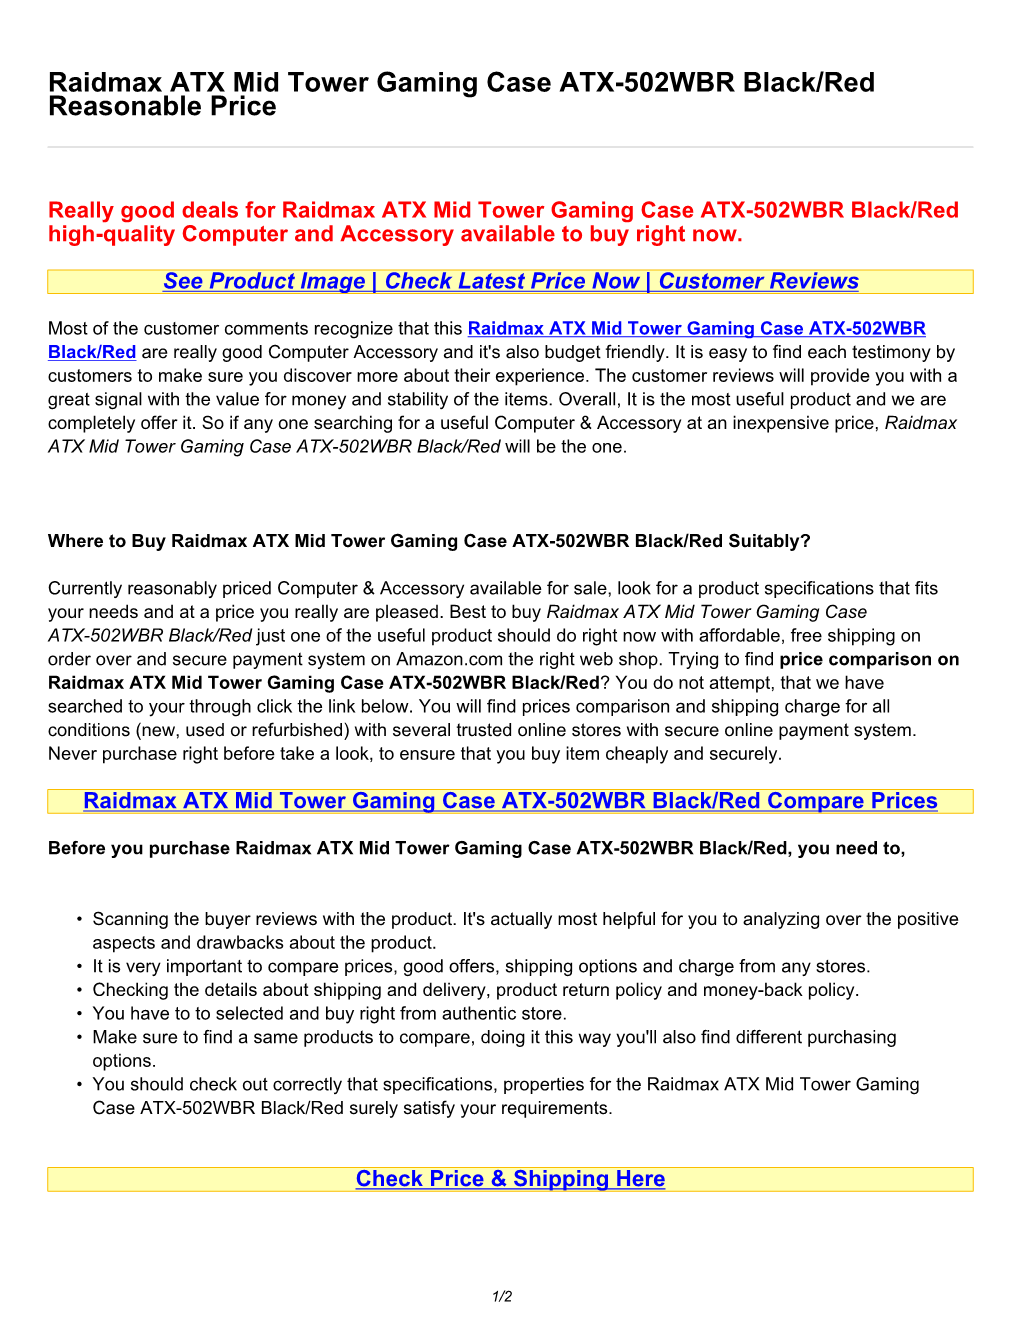 Raidmax ATX Mid Tower Gaming Case ATX-502WBR Black/Red Reasonable Price